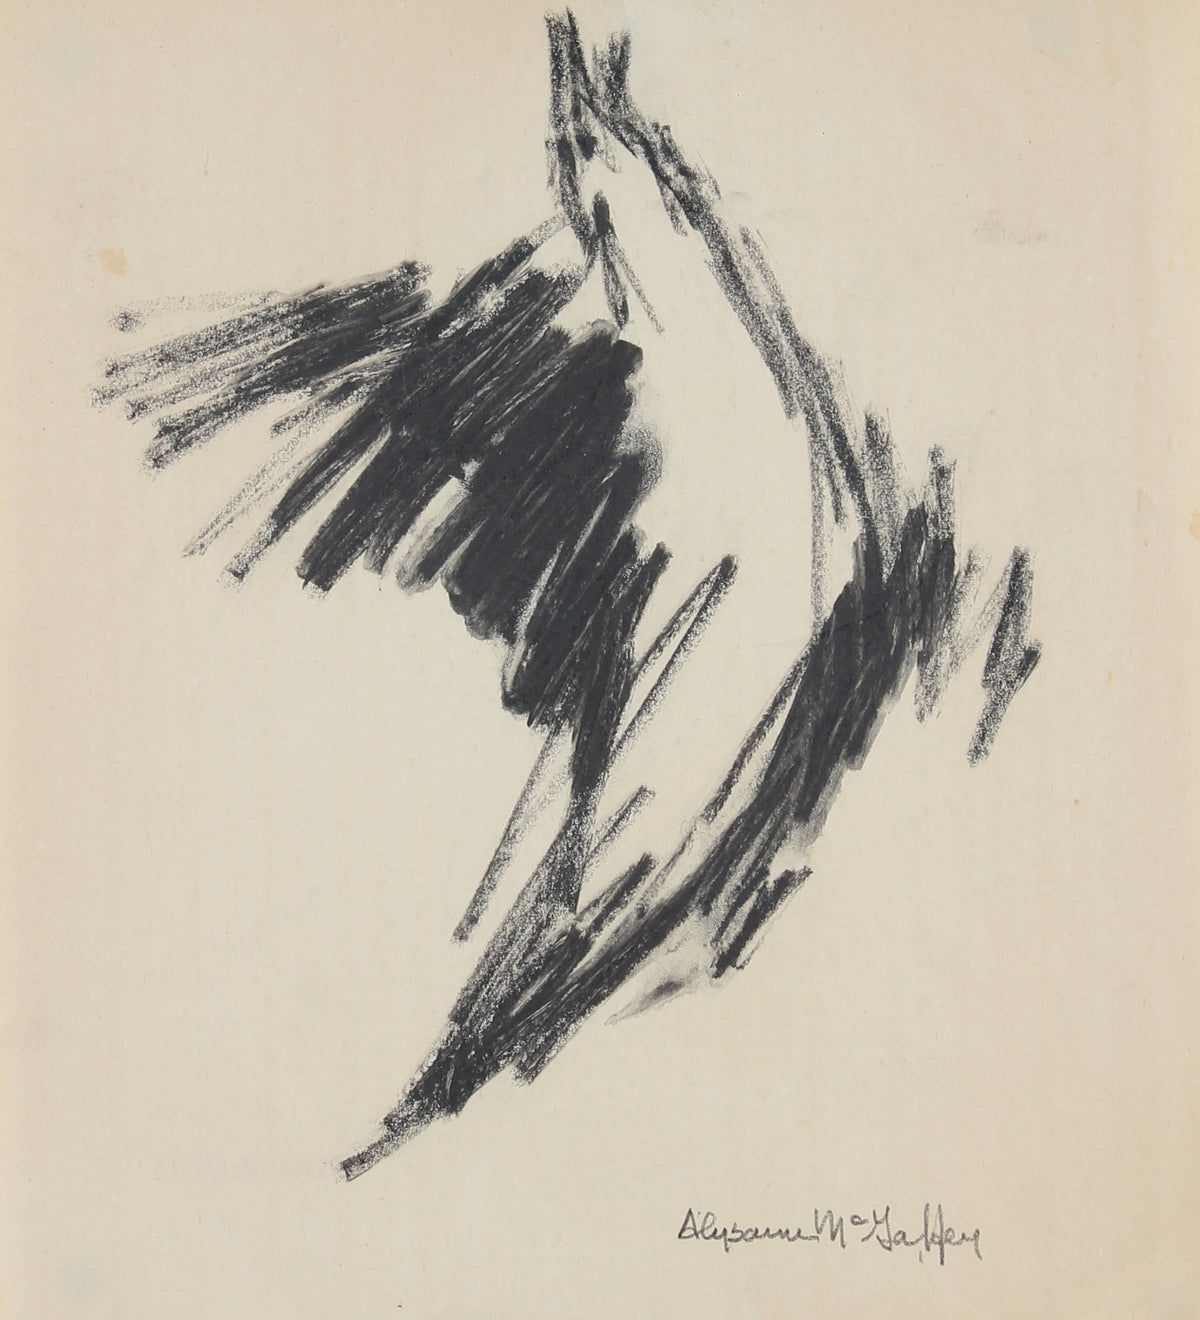 Abstracted Bird in Flight &lt;br&gt;20th Century Charcoal&lt;br&gt;&lt;br&gt;#22752